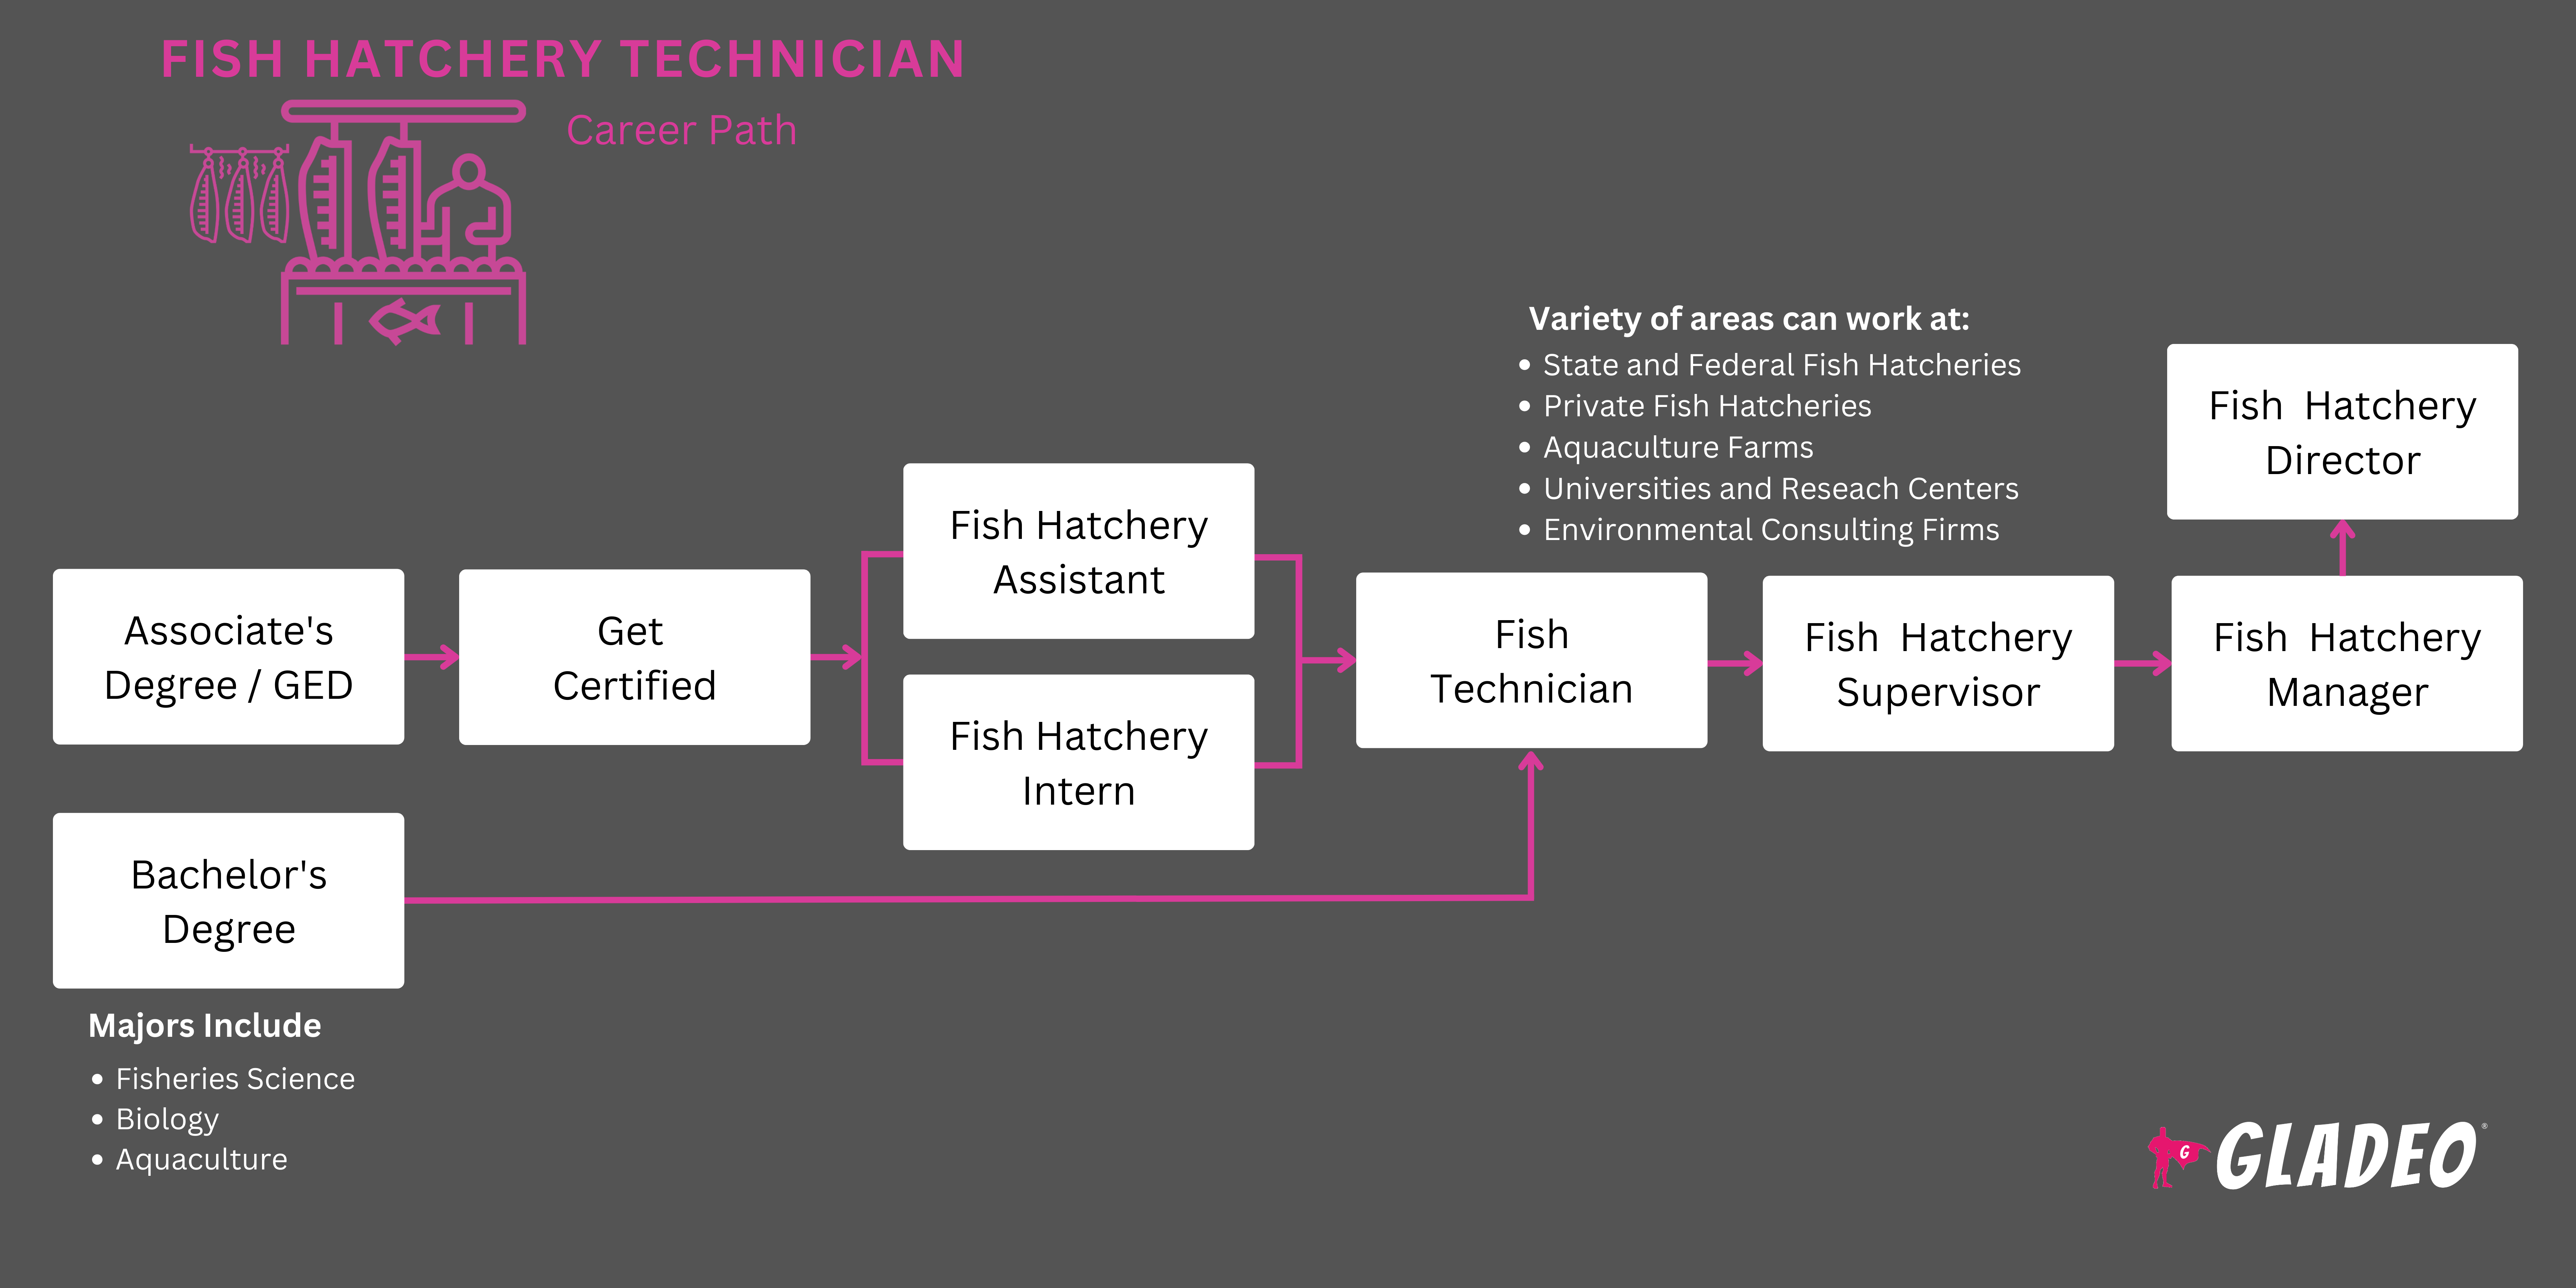 Fish Hatchery Technician